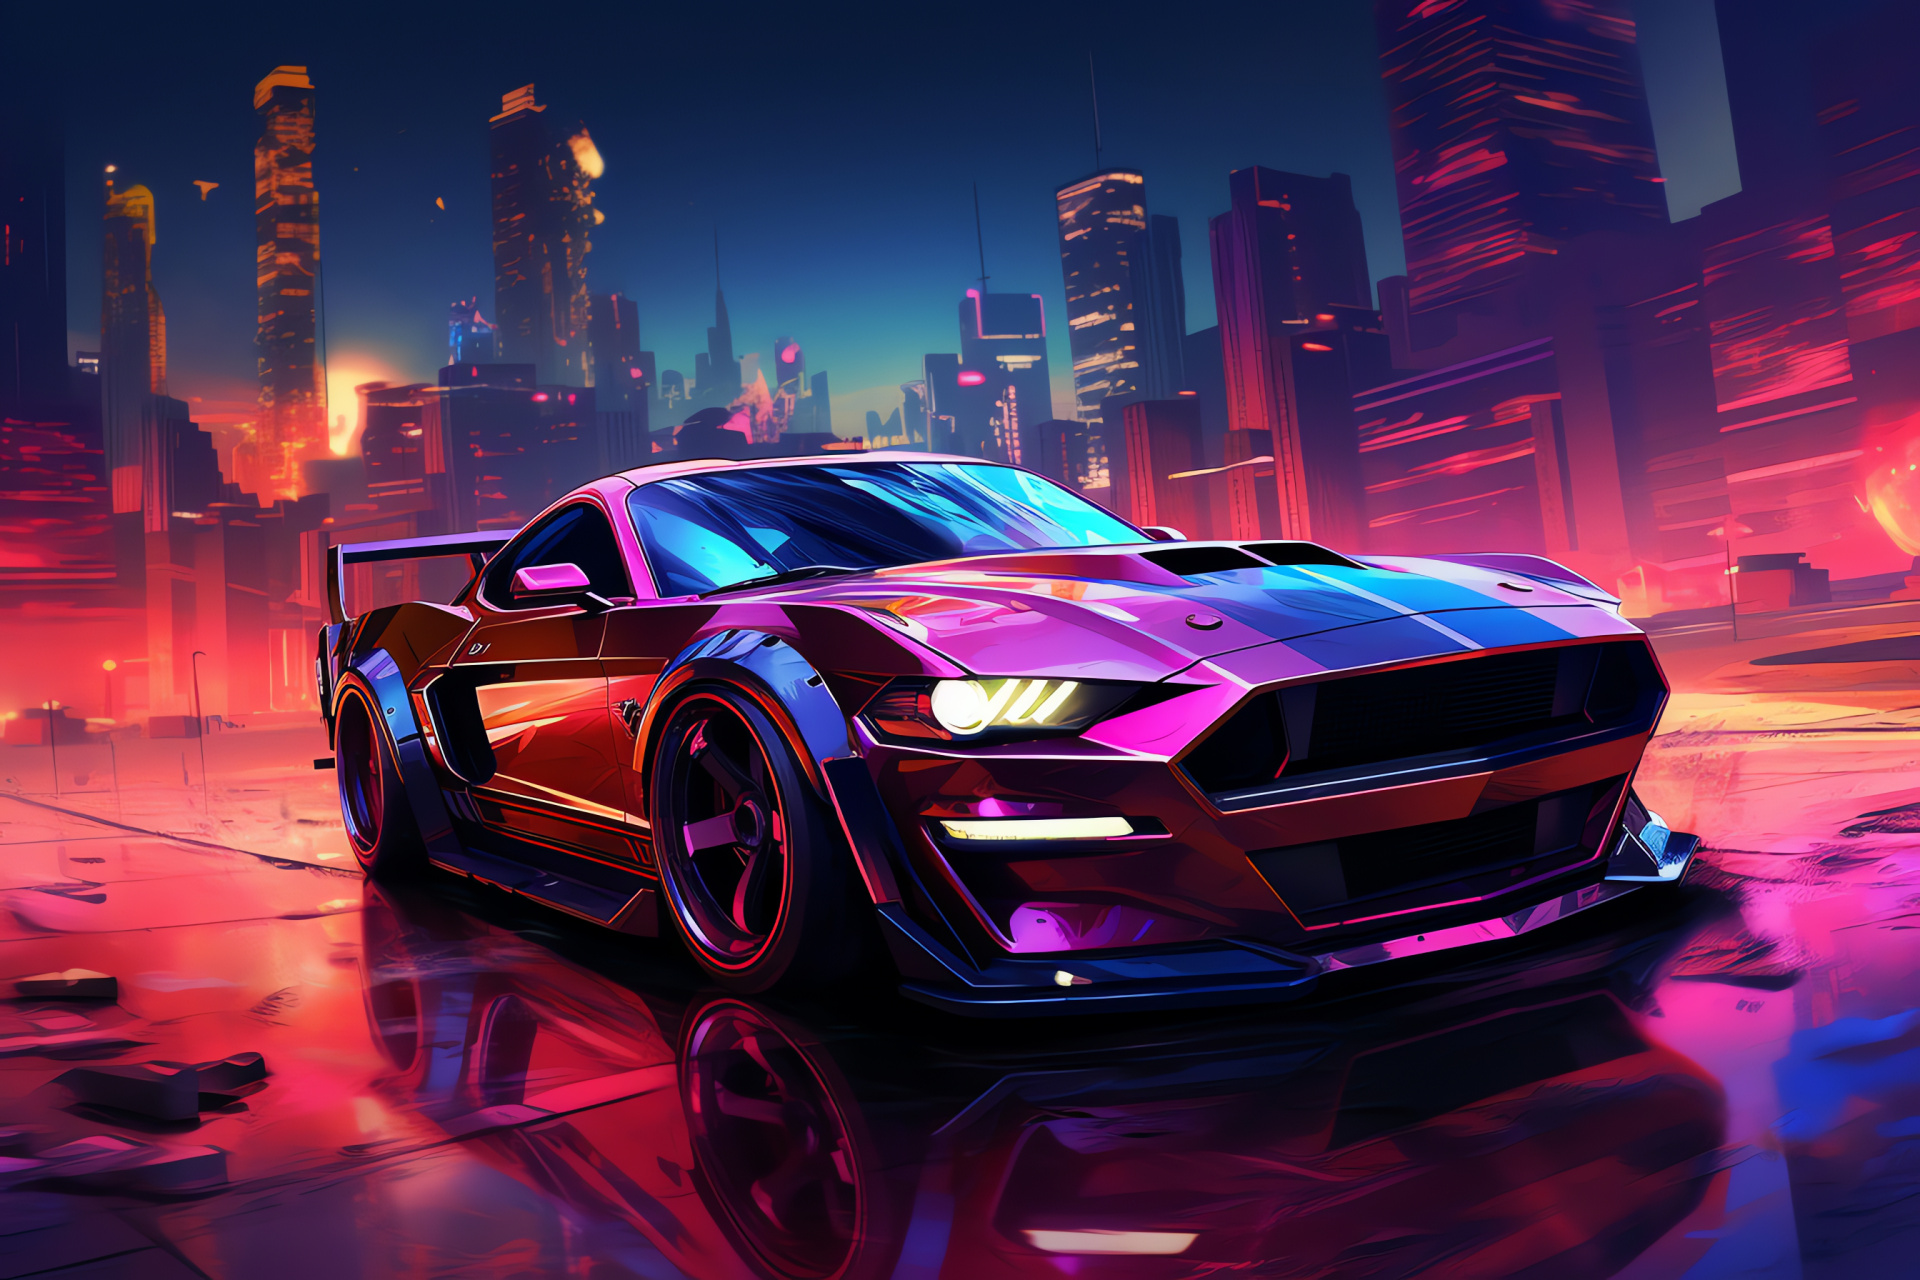 Mustang car, Aerial perspective, Futuristic cityscape, Cyberpunk aesthetics, Neon glow, HD Desktop Image